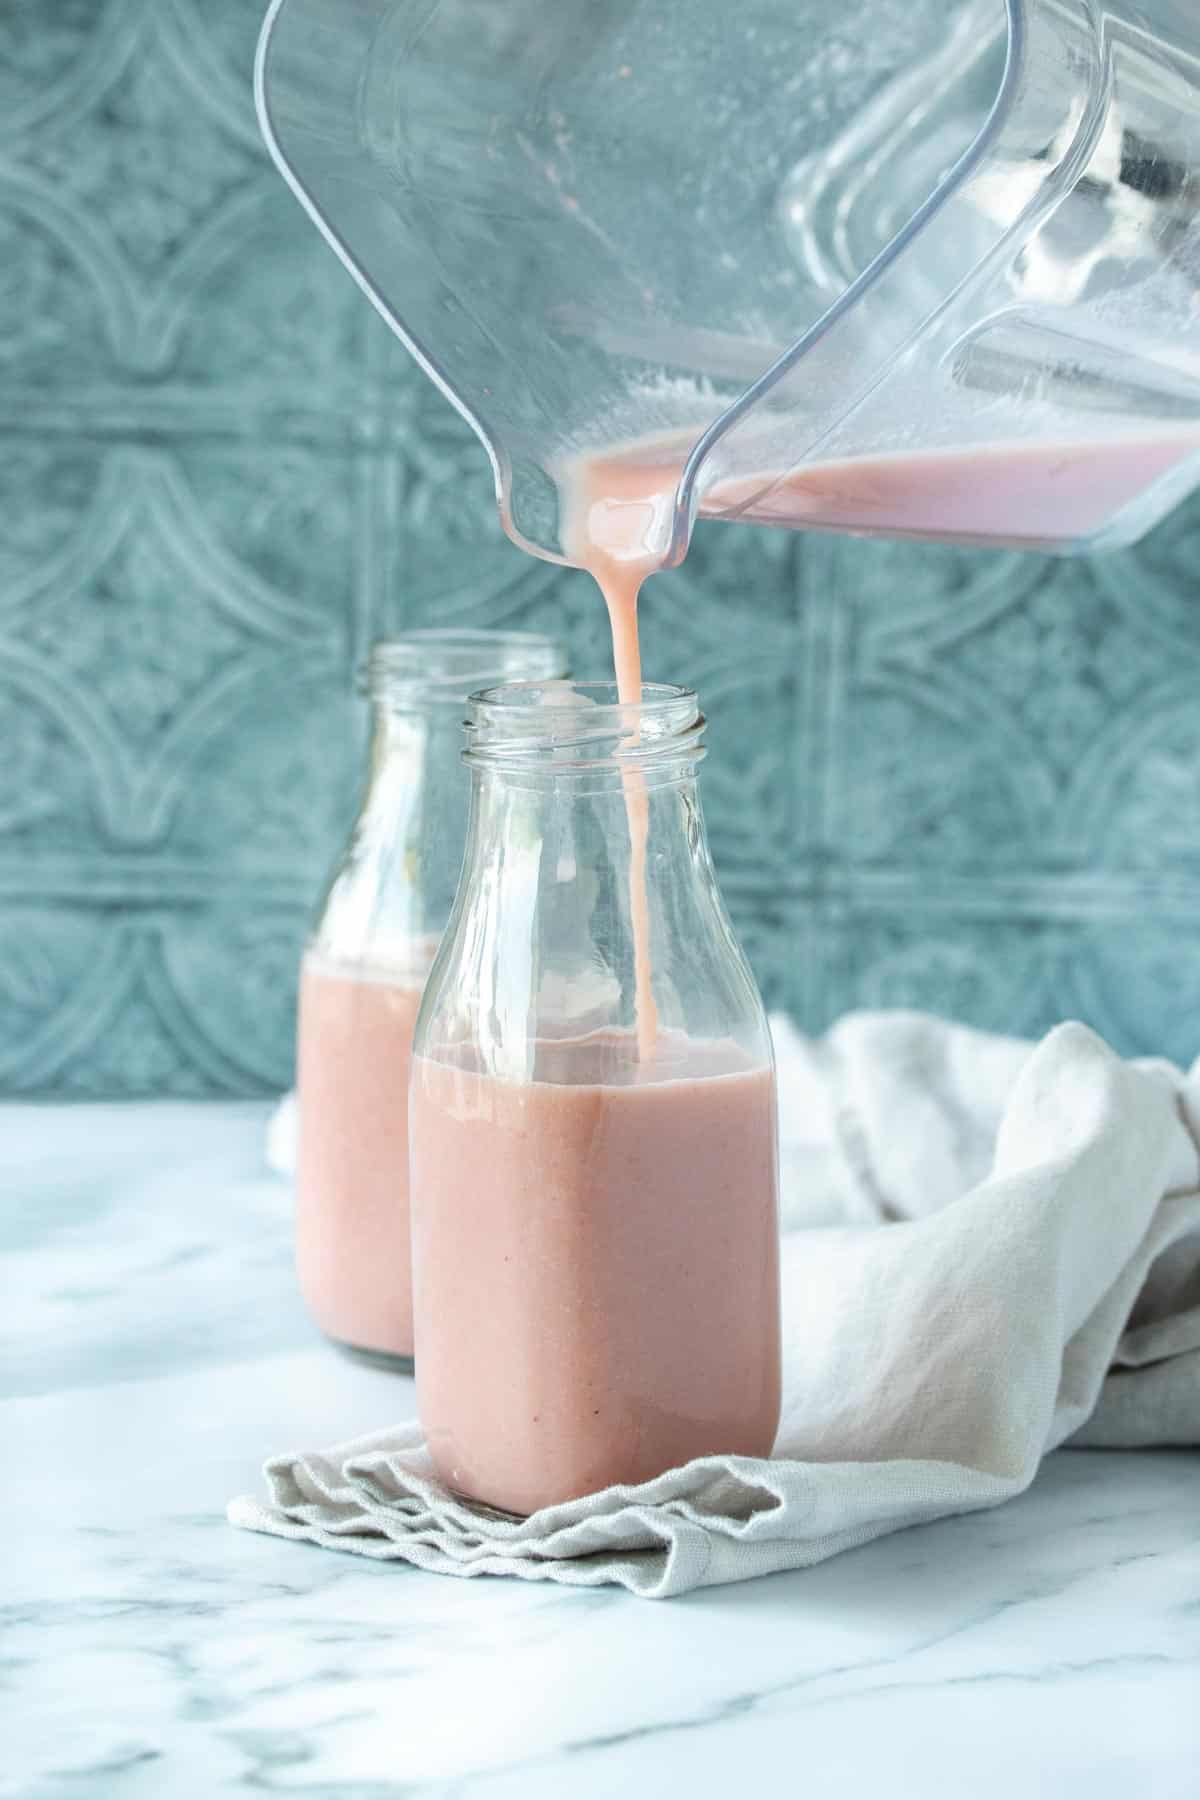 Homemade vegan strawberry milk syrup pouring into a glass jar of milk